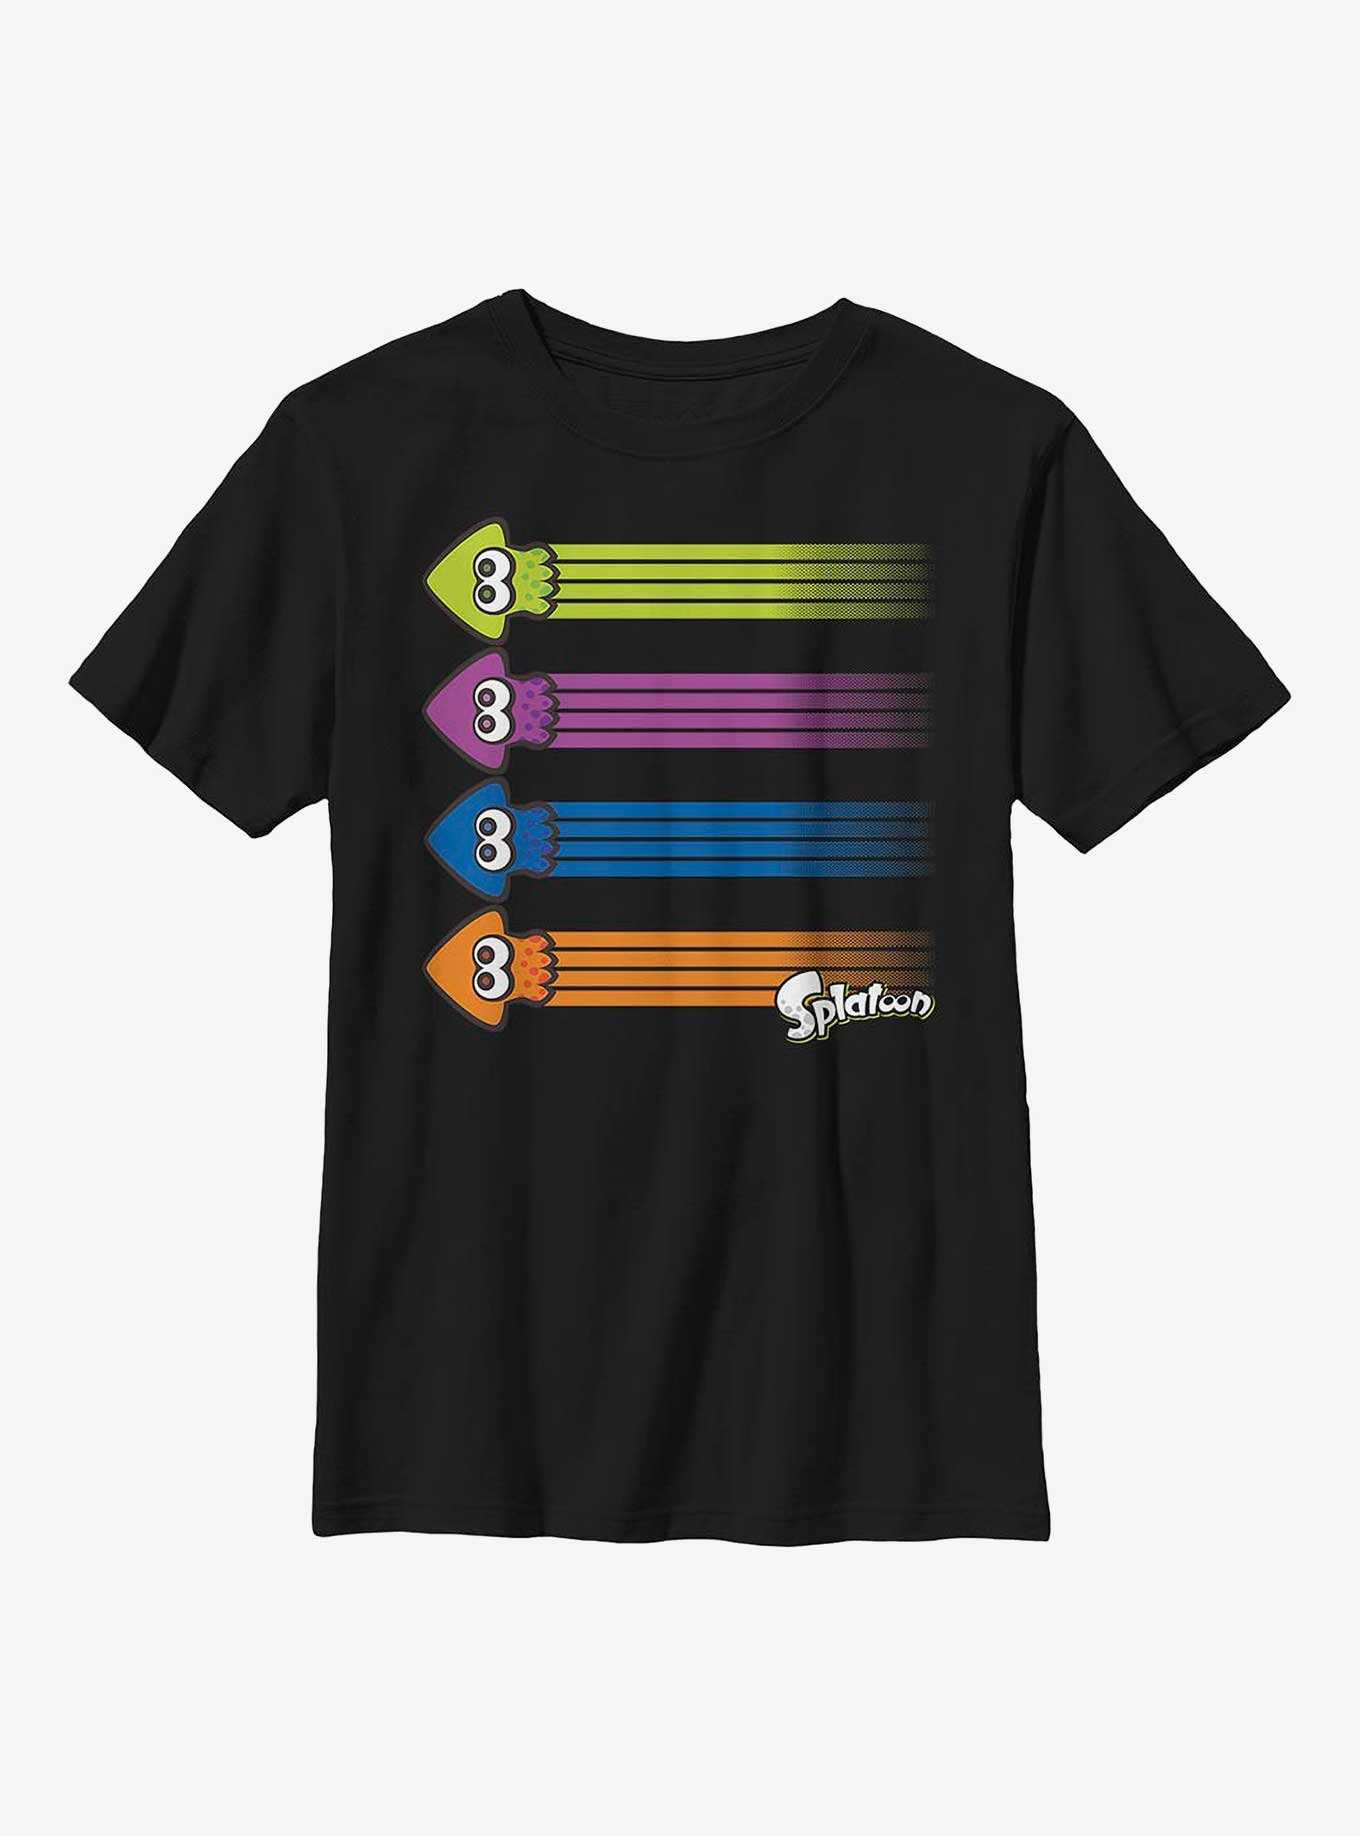 Nintendo Splatoon Inkling Squid Rainbow Youth T-Shirt, , hi-res